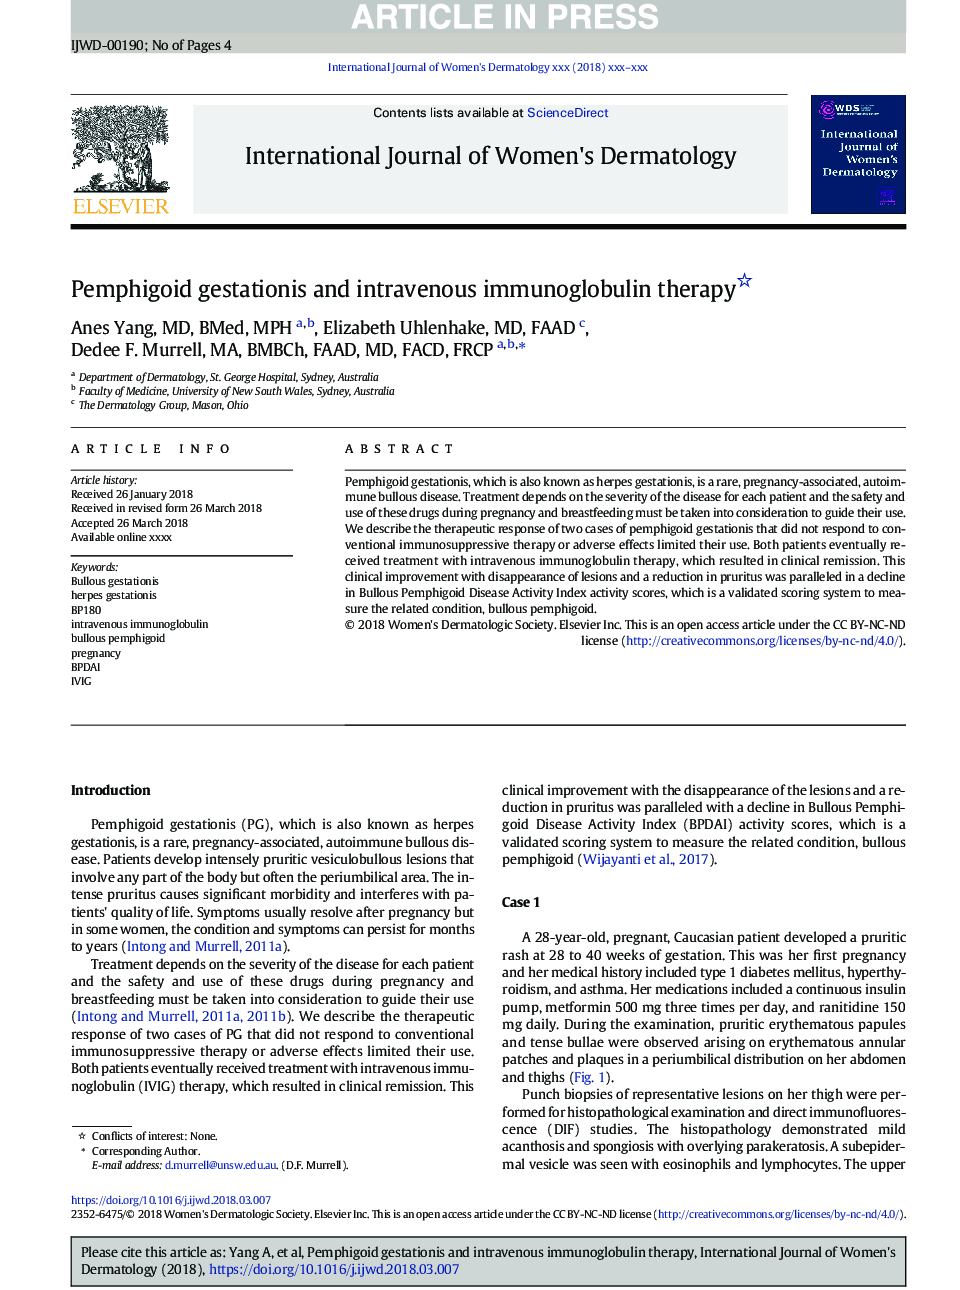 Pemphigoid gestationis and intravenous immunoglobulin therapy